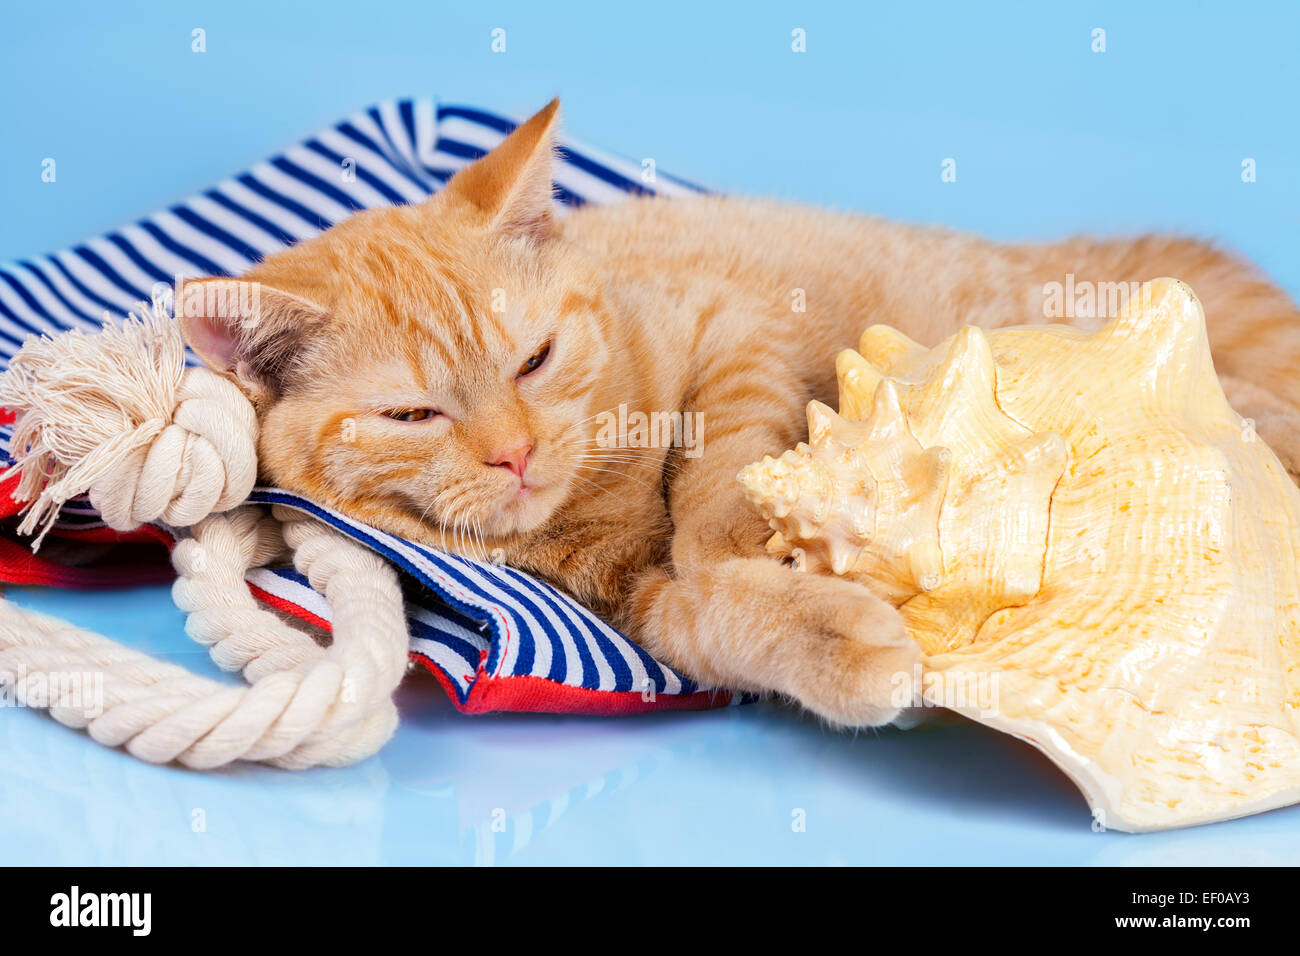 Beach scene. Cute red cat sleeping on beach bag near big shell Stock Photo